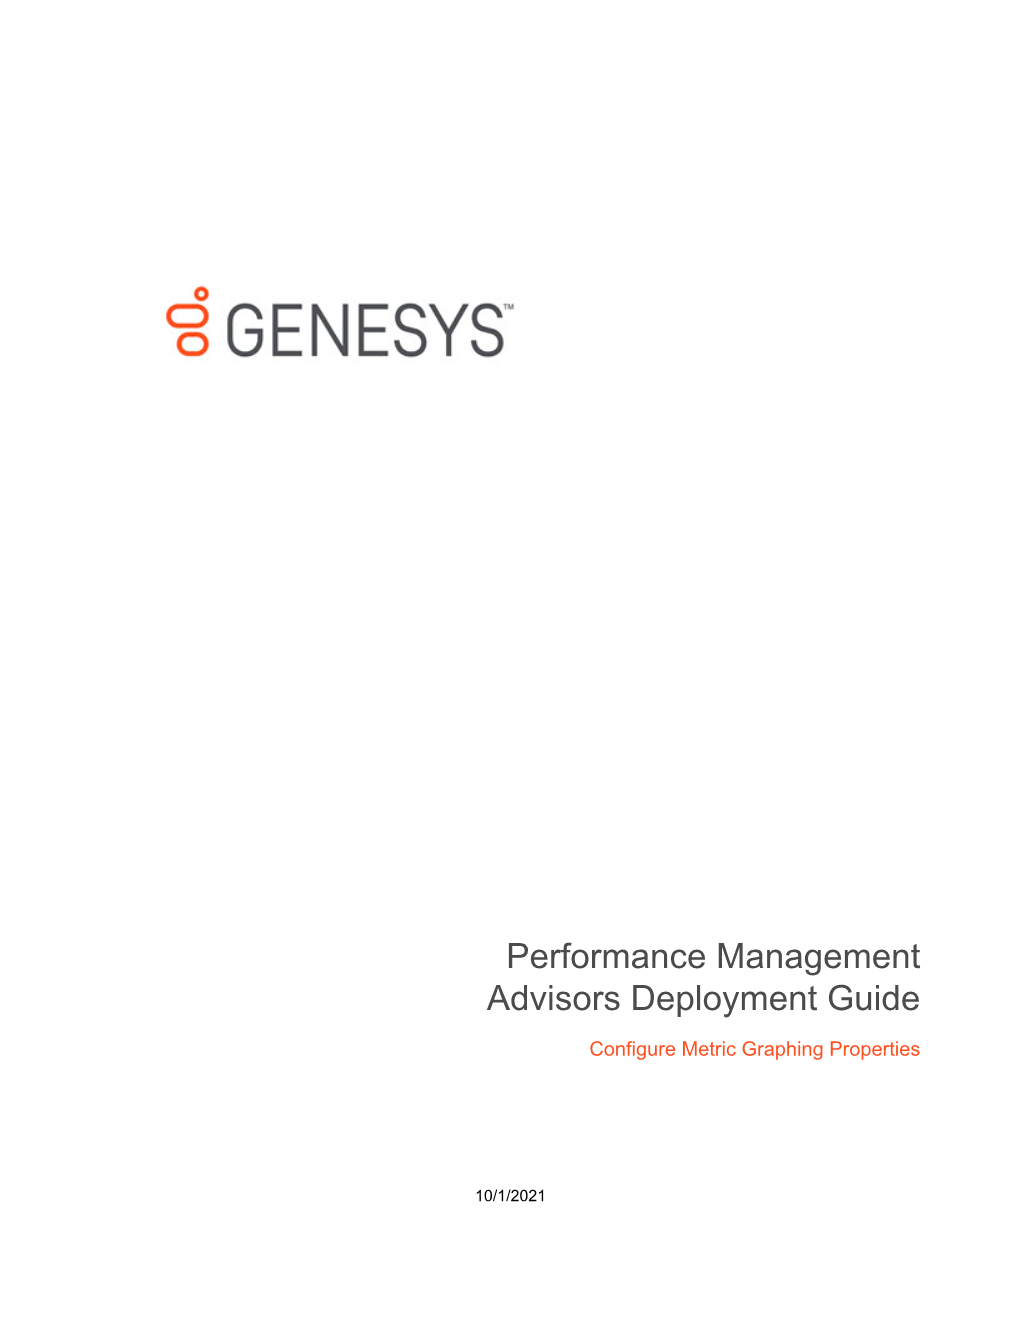 Performance Management Advisors Deployment Guide